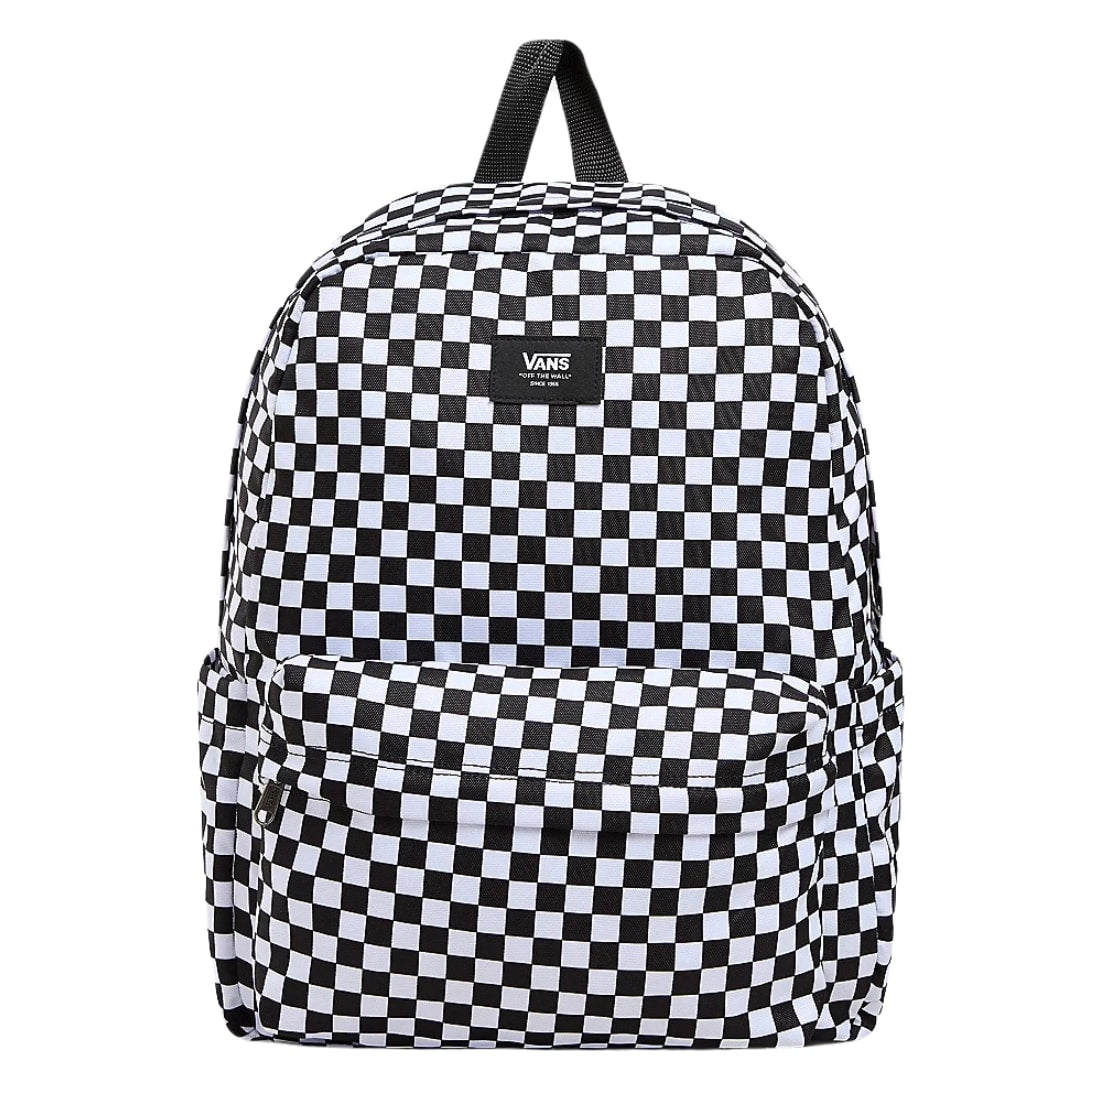 Vans Old Skool Check Backpack - Black/White SP24 - Backpack by Vans One Size